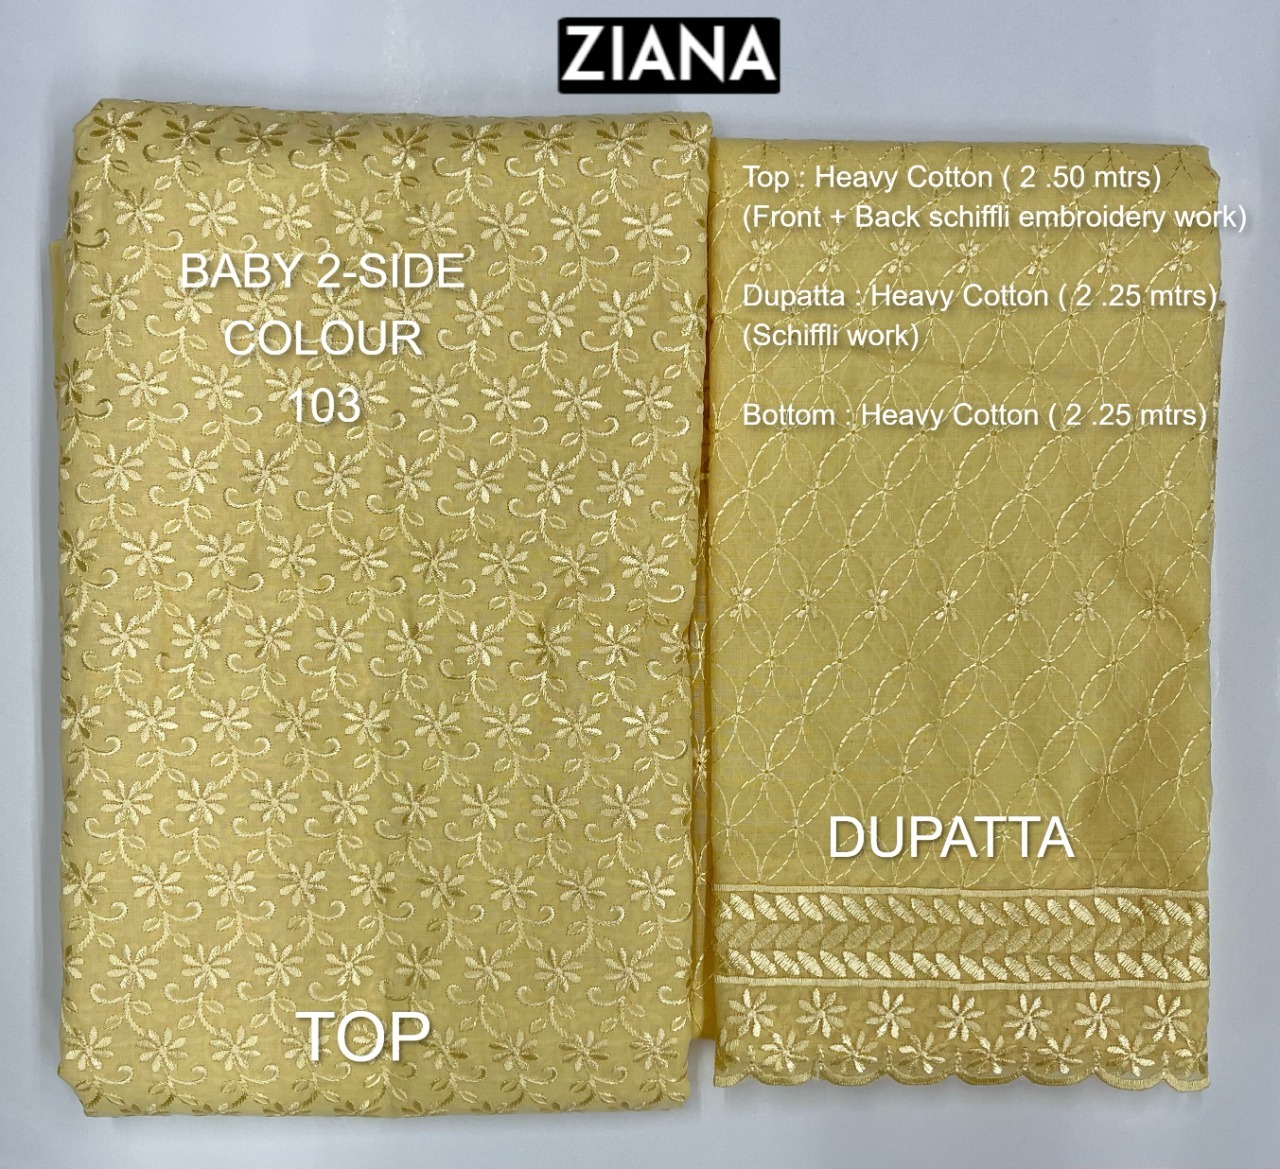 ziana baby 2 side colour 103 heavy cotton regal look embroidery salwar suit colour set